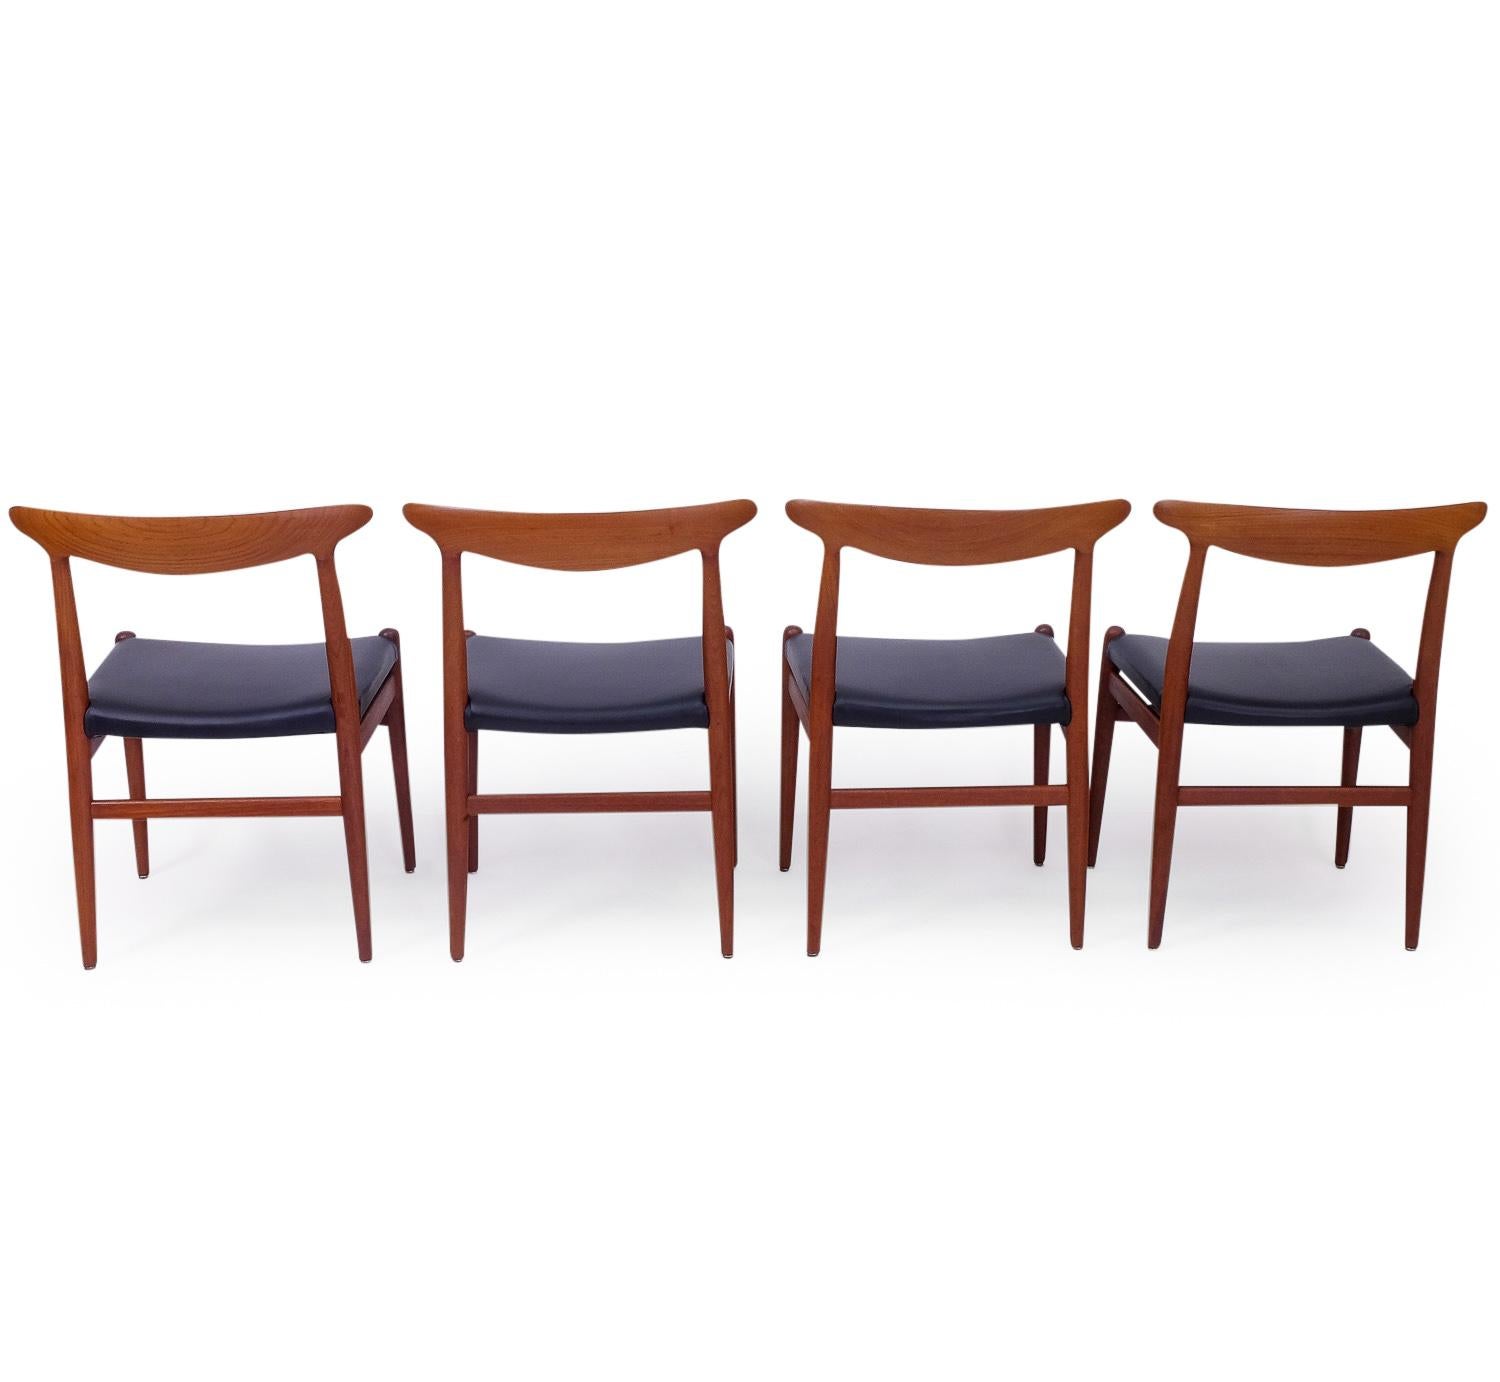 Classic Danish Design Hans Wegner W2 Chairs in Teak, Set of 4 1